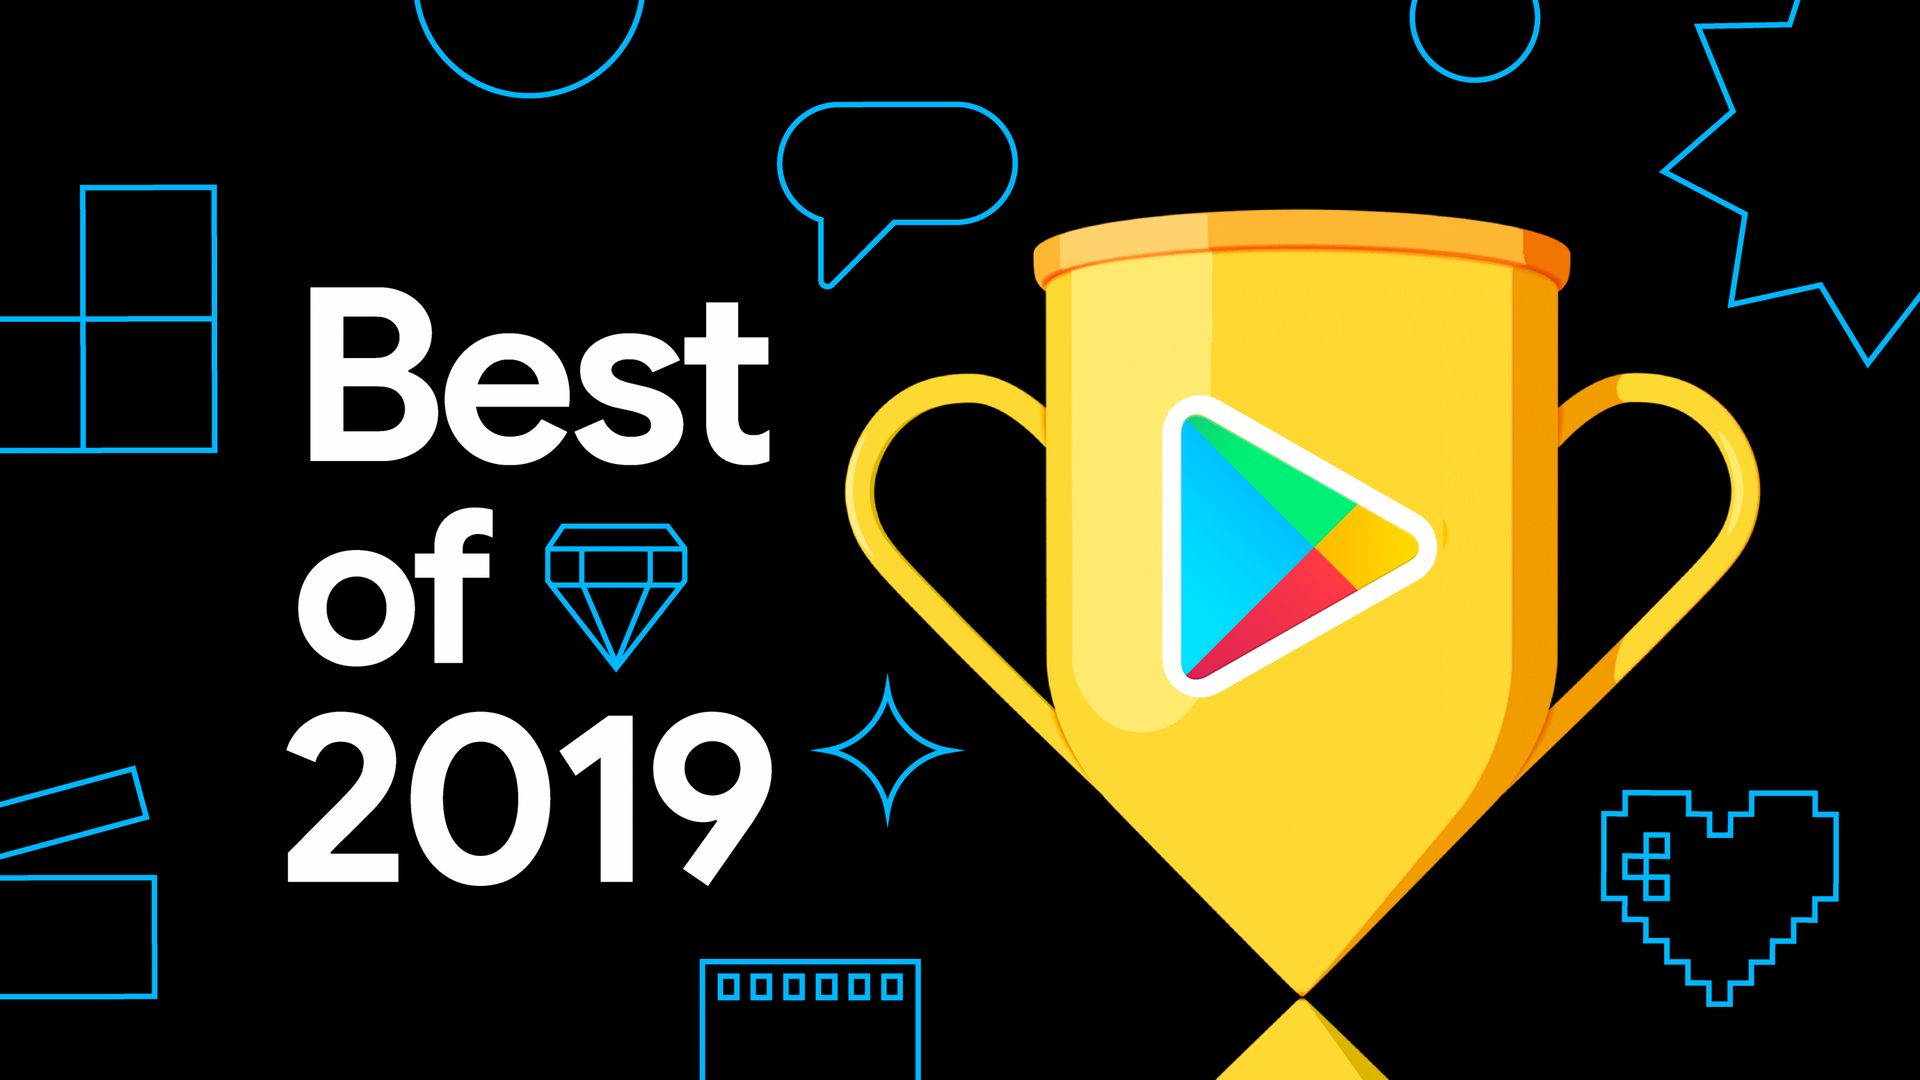 Le Play Store dévoile son "Best of 2019"